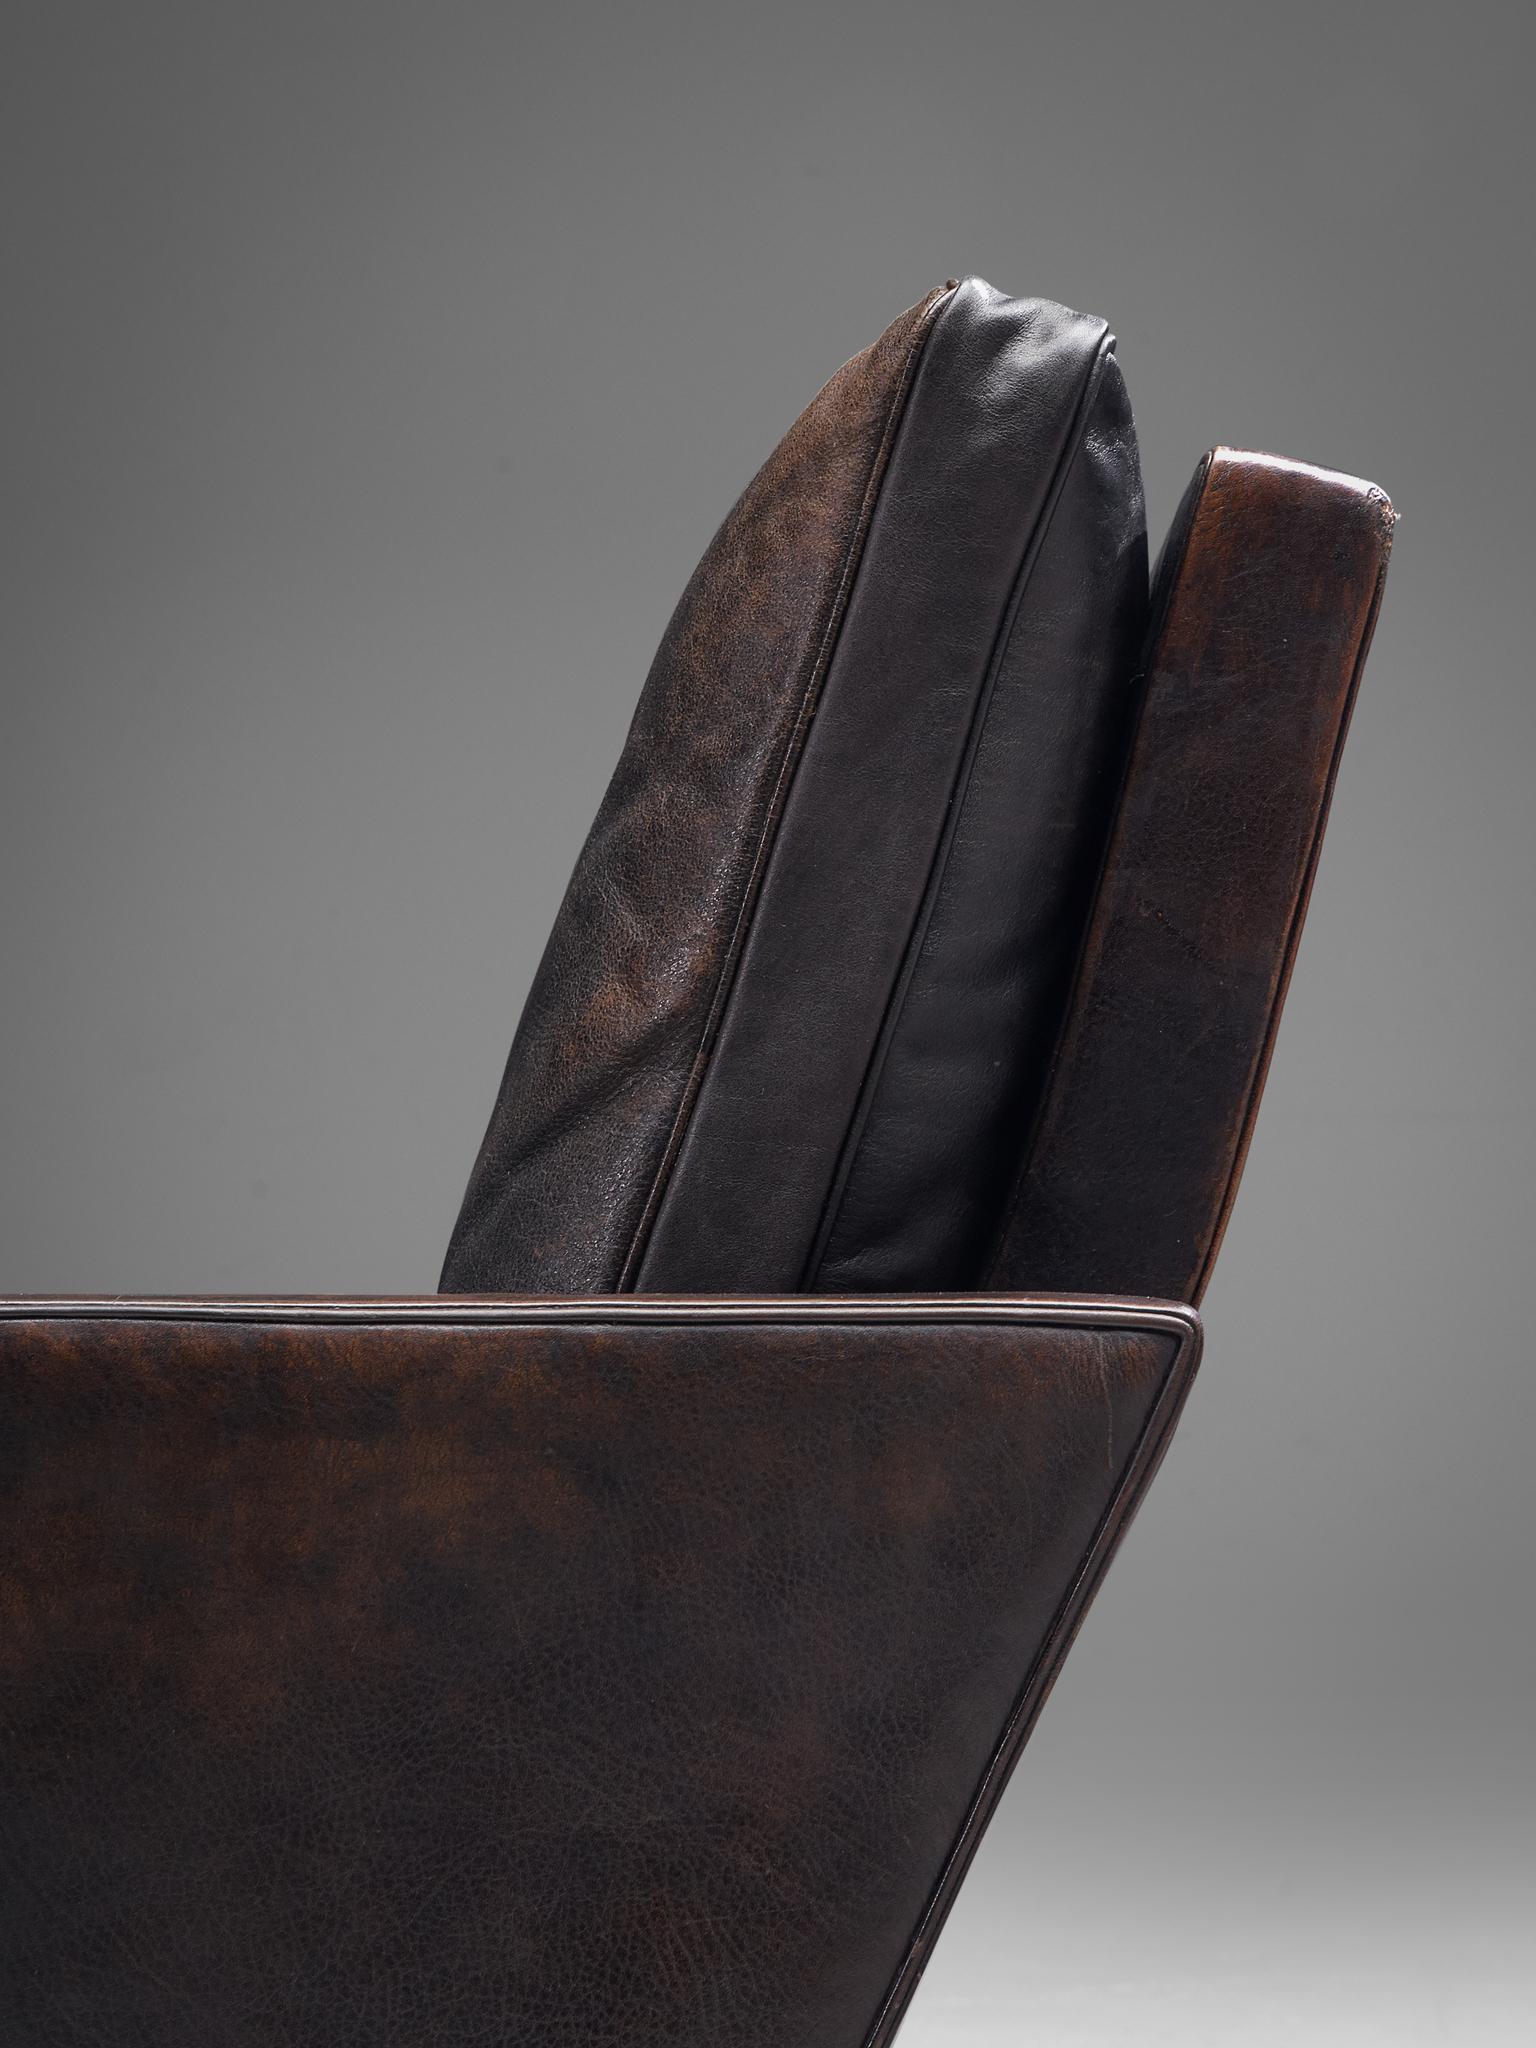 Pair of Poul Kjaerholm PK31-1 Lounge Chairs in Original Black Leather 1